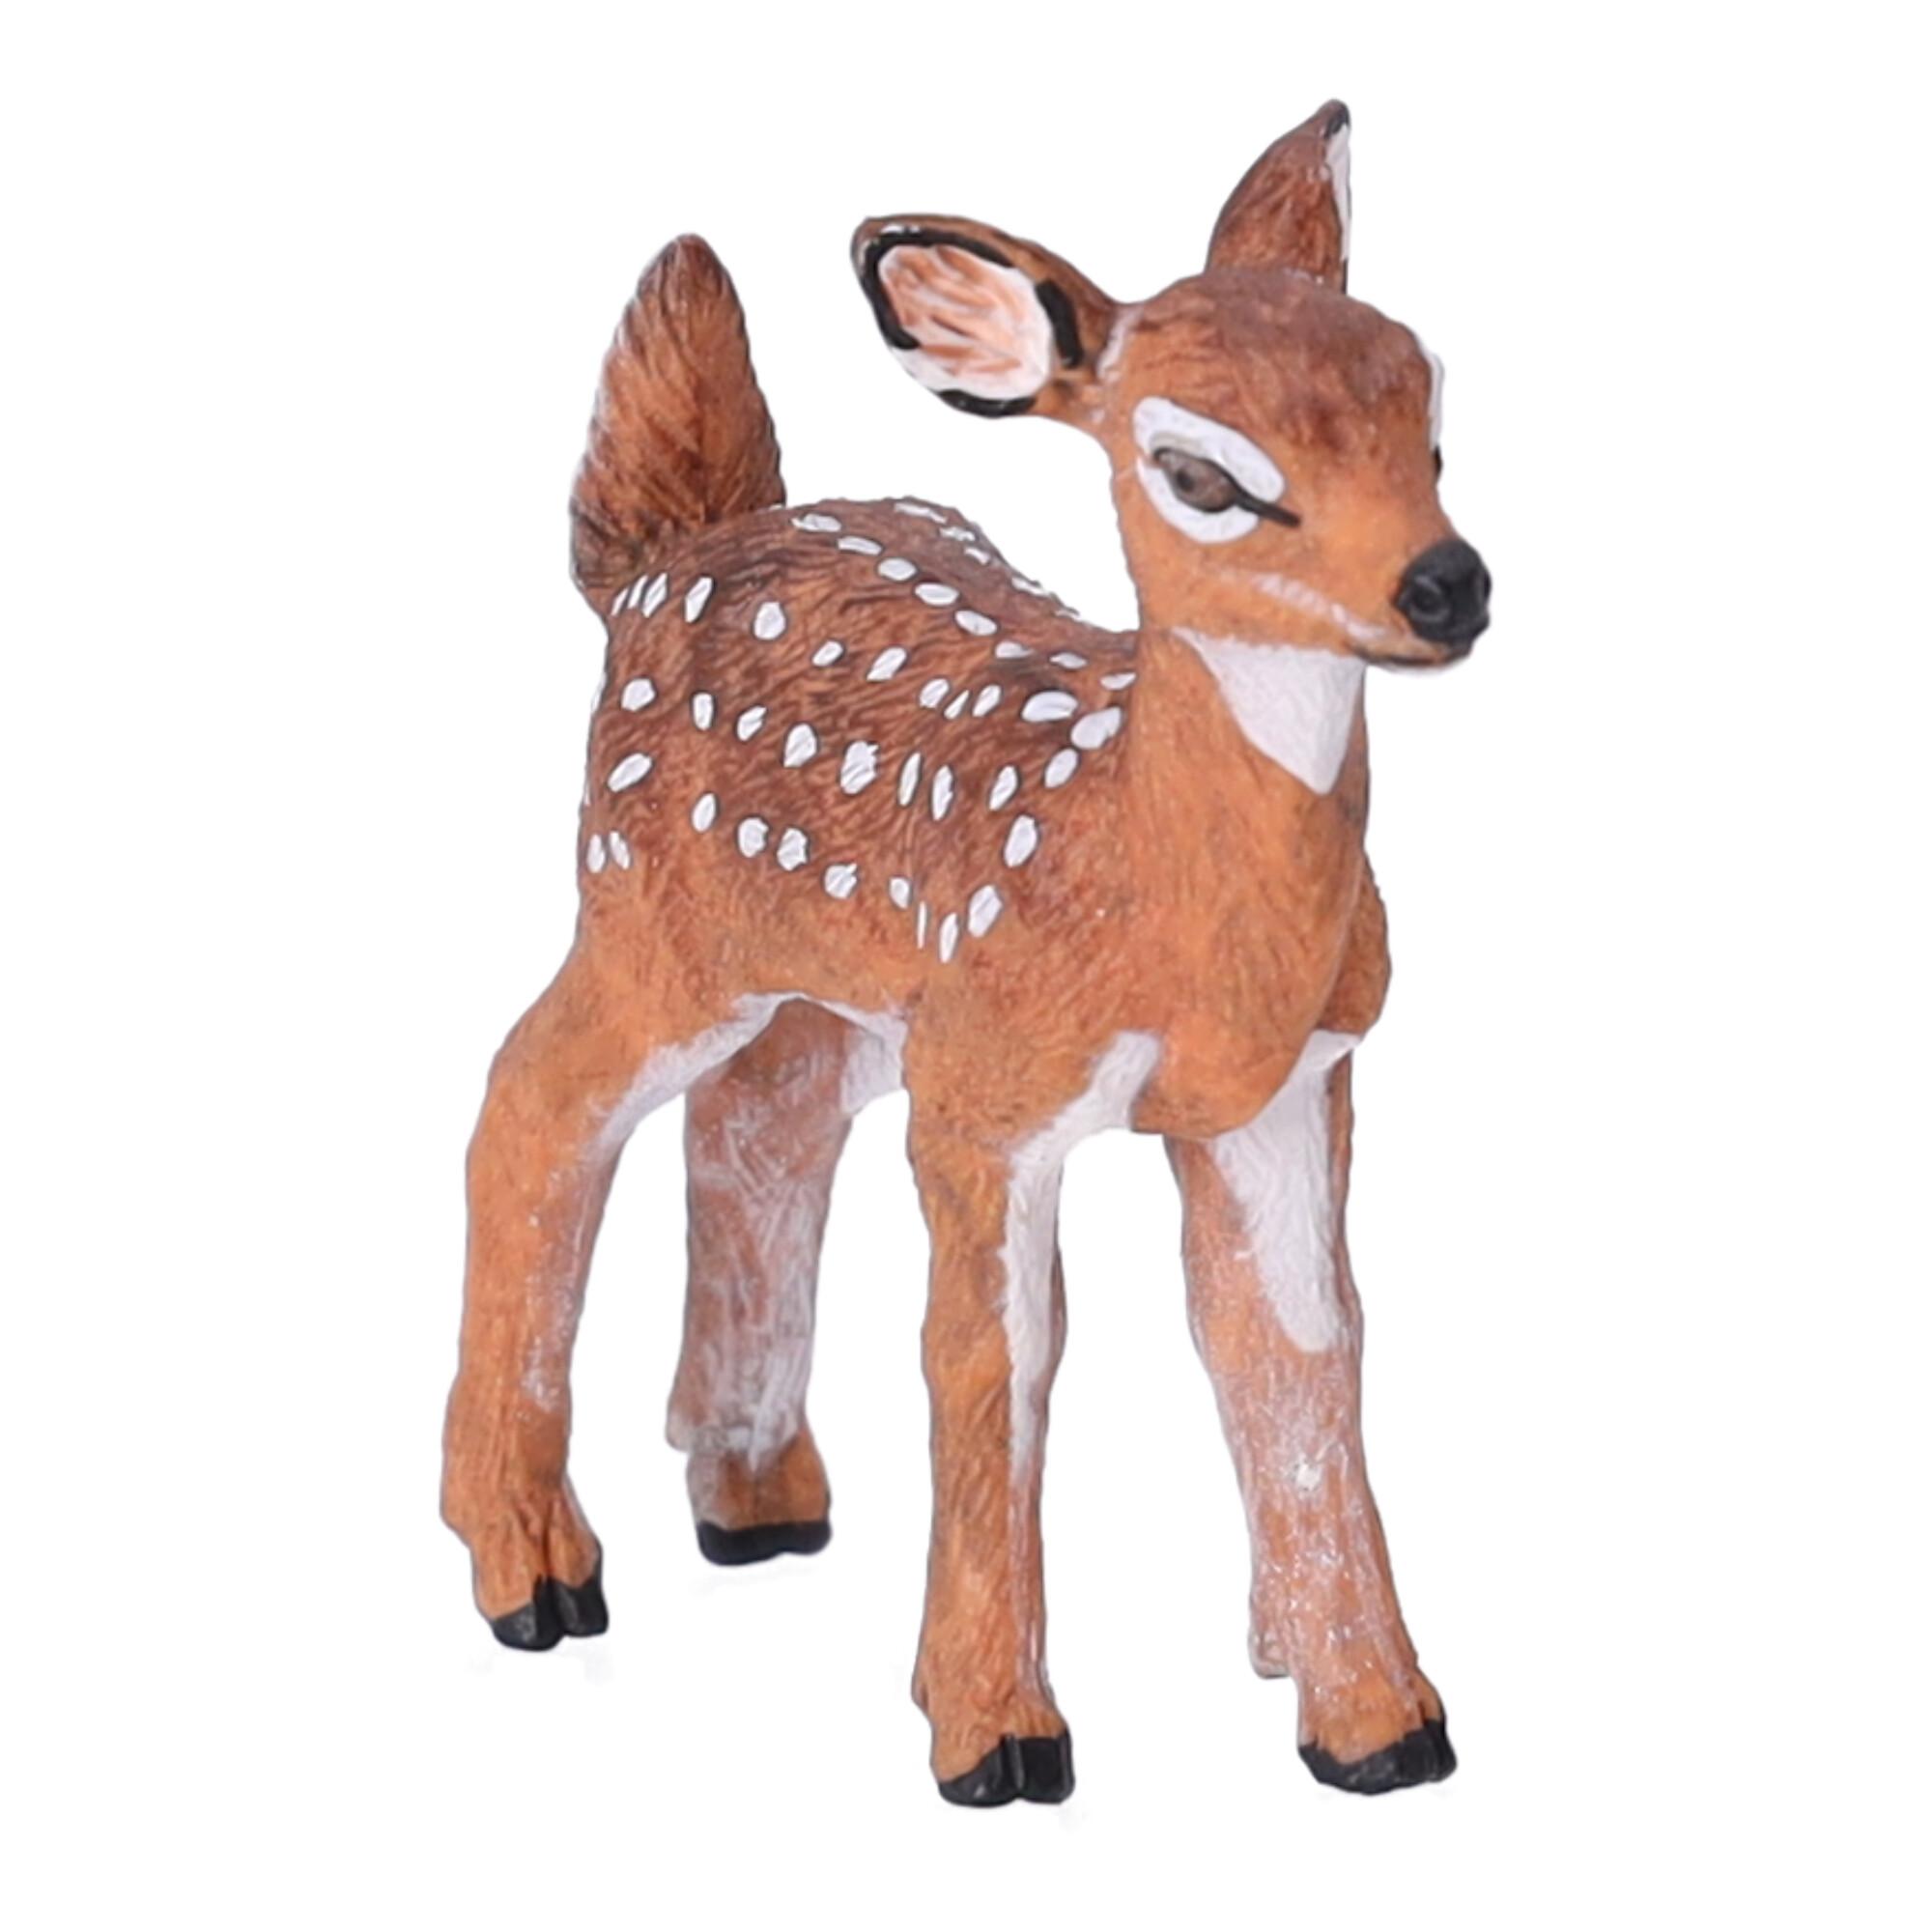 Collectible figurine Deer, Papo